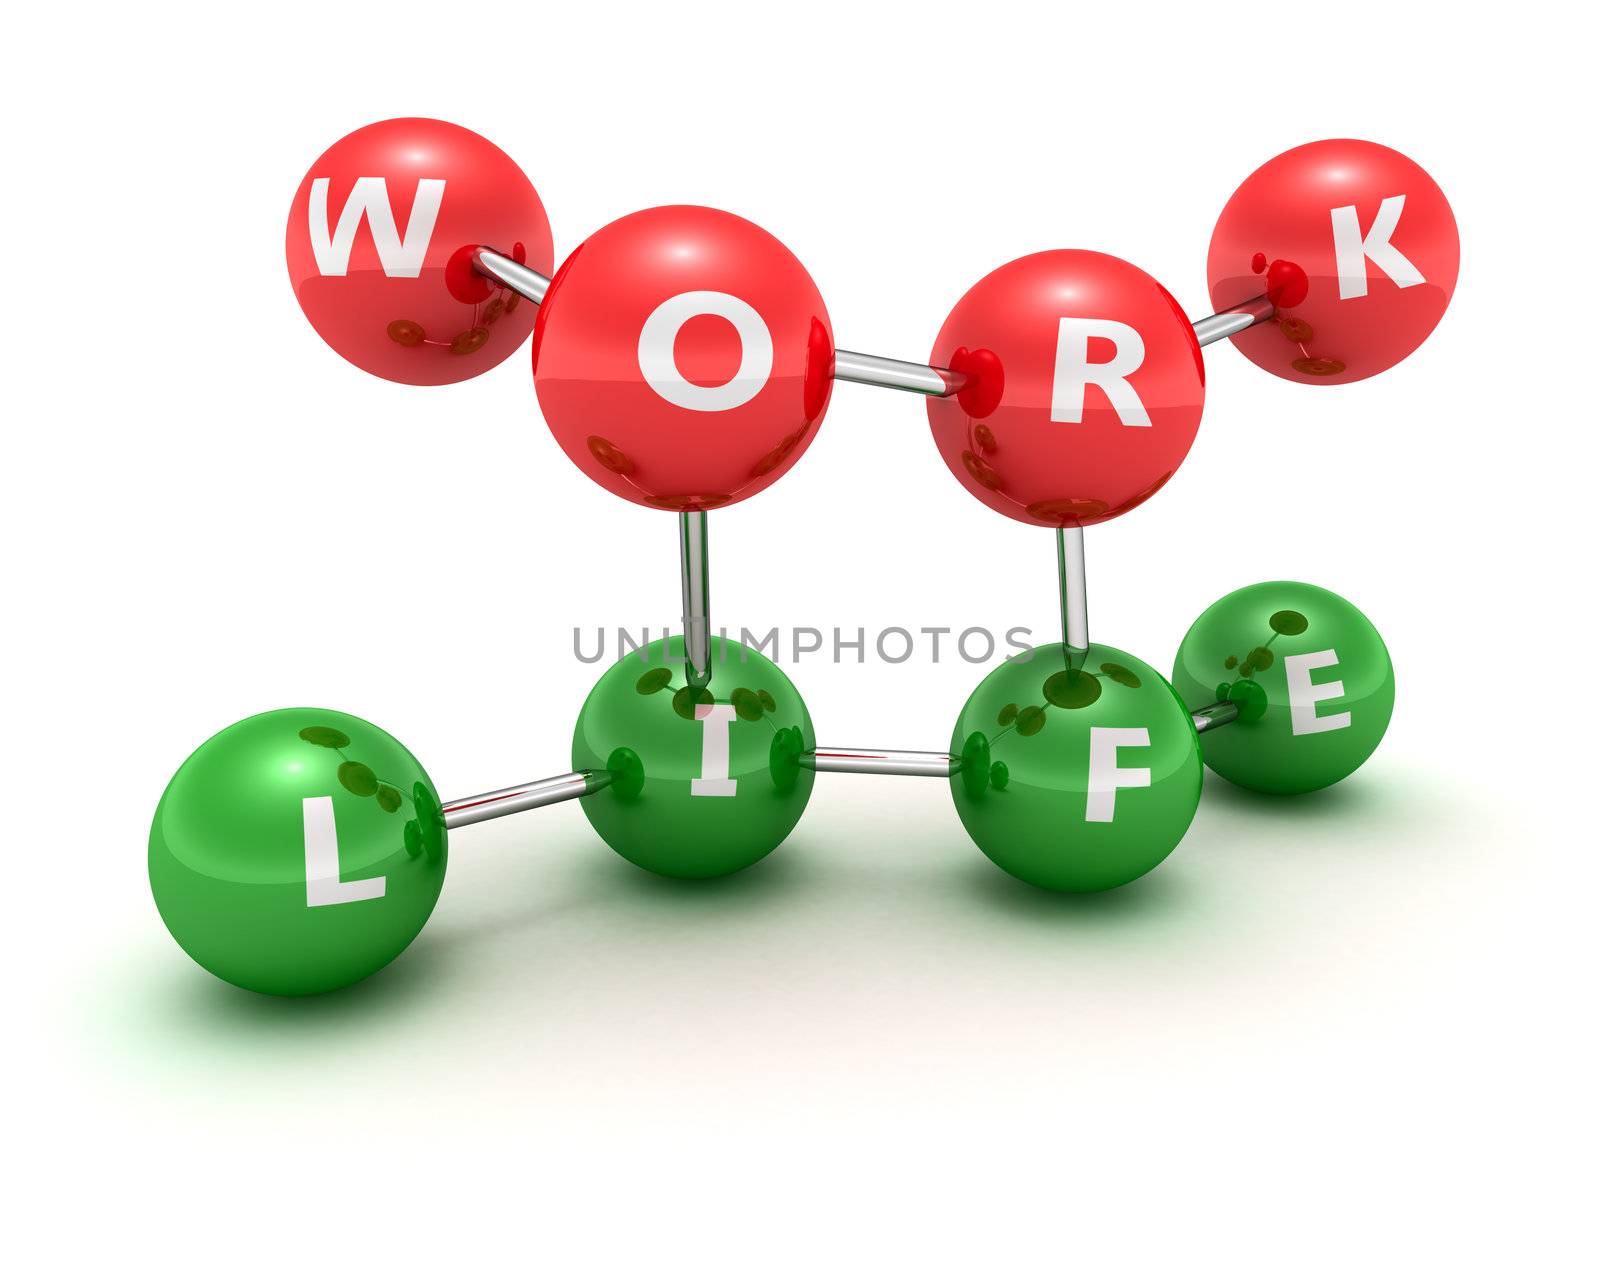 Correlation scheme of work and life 